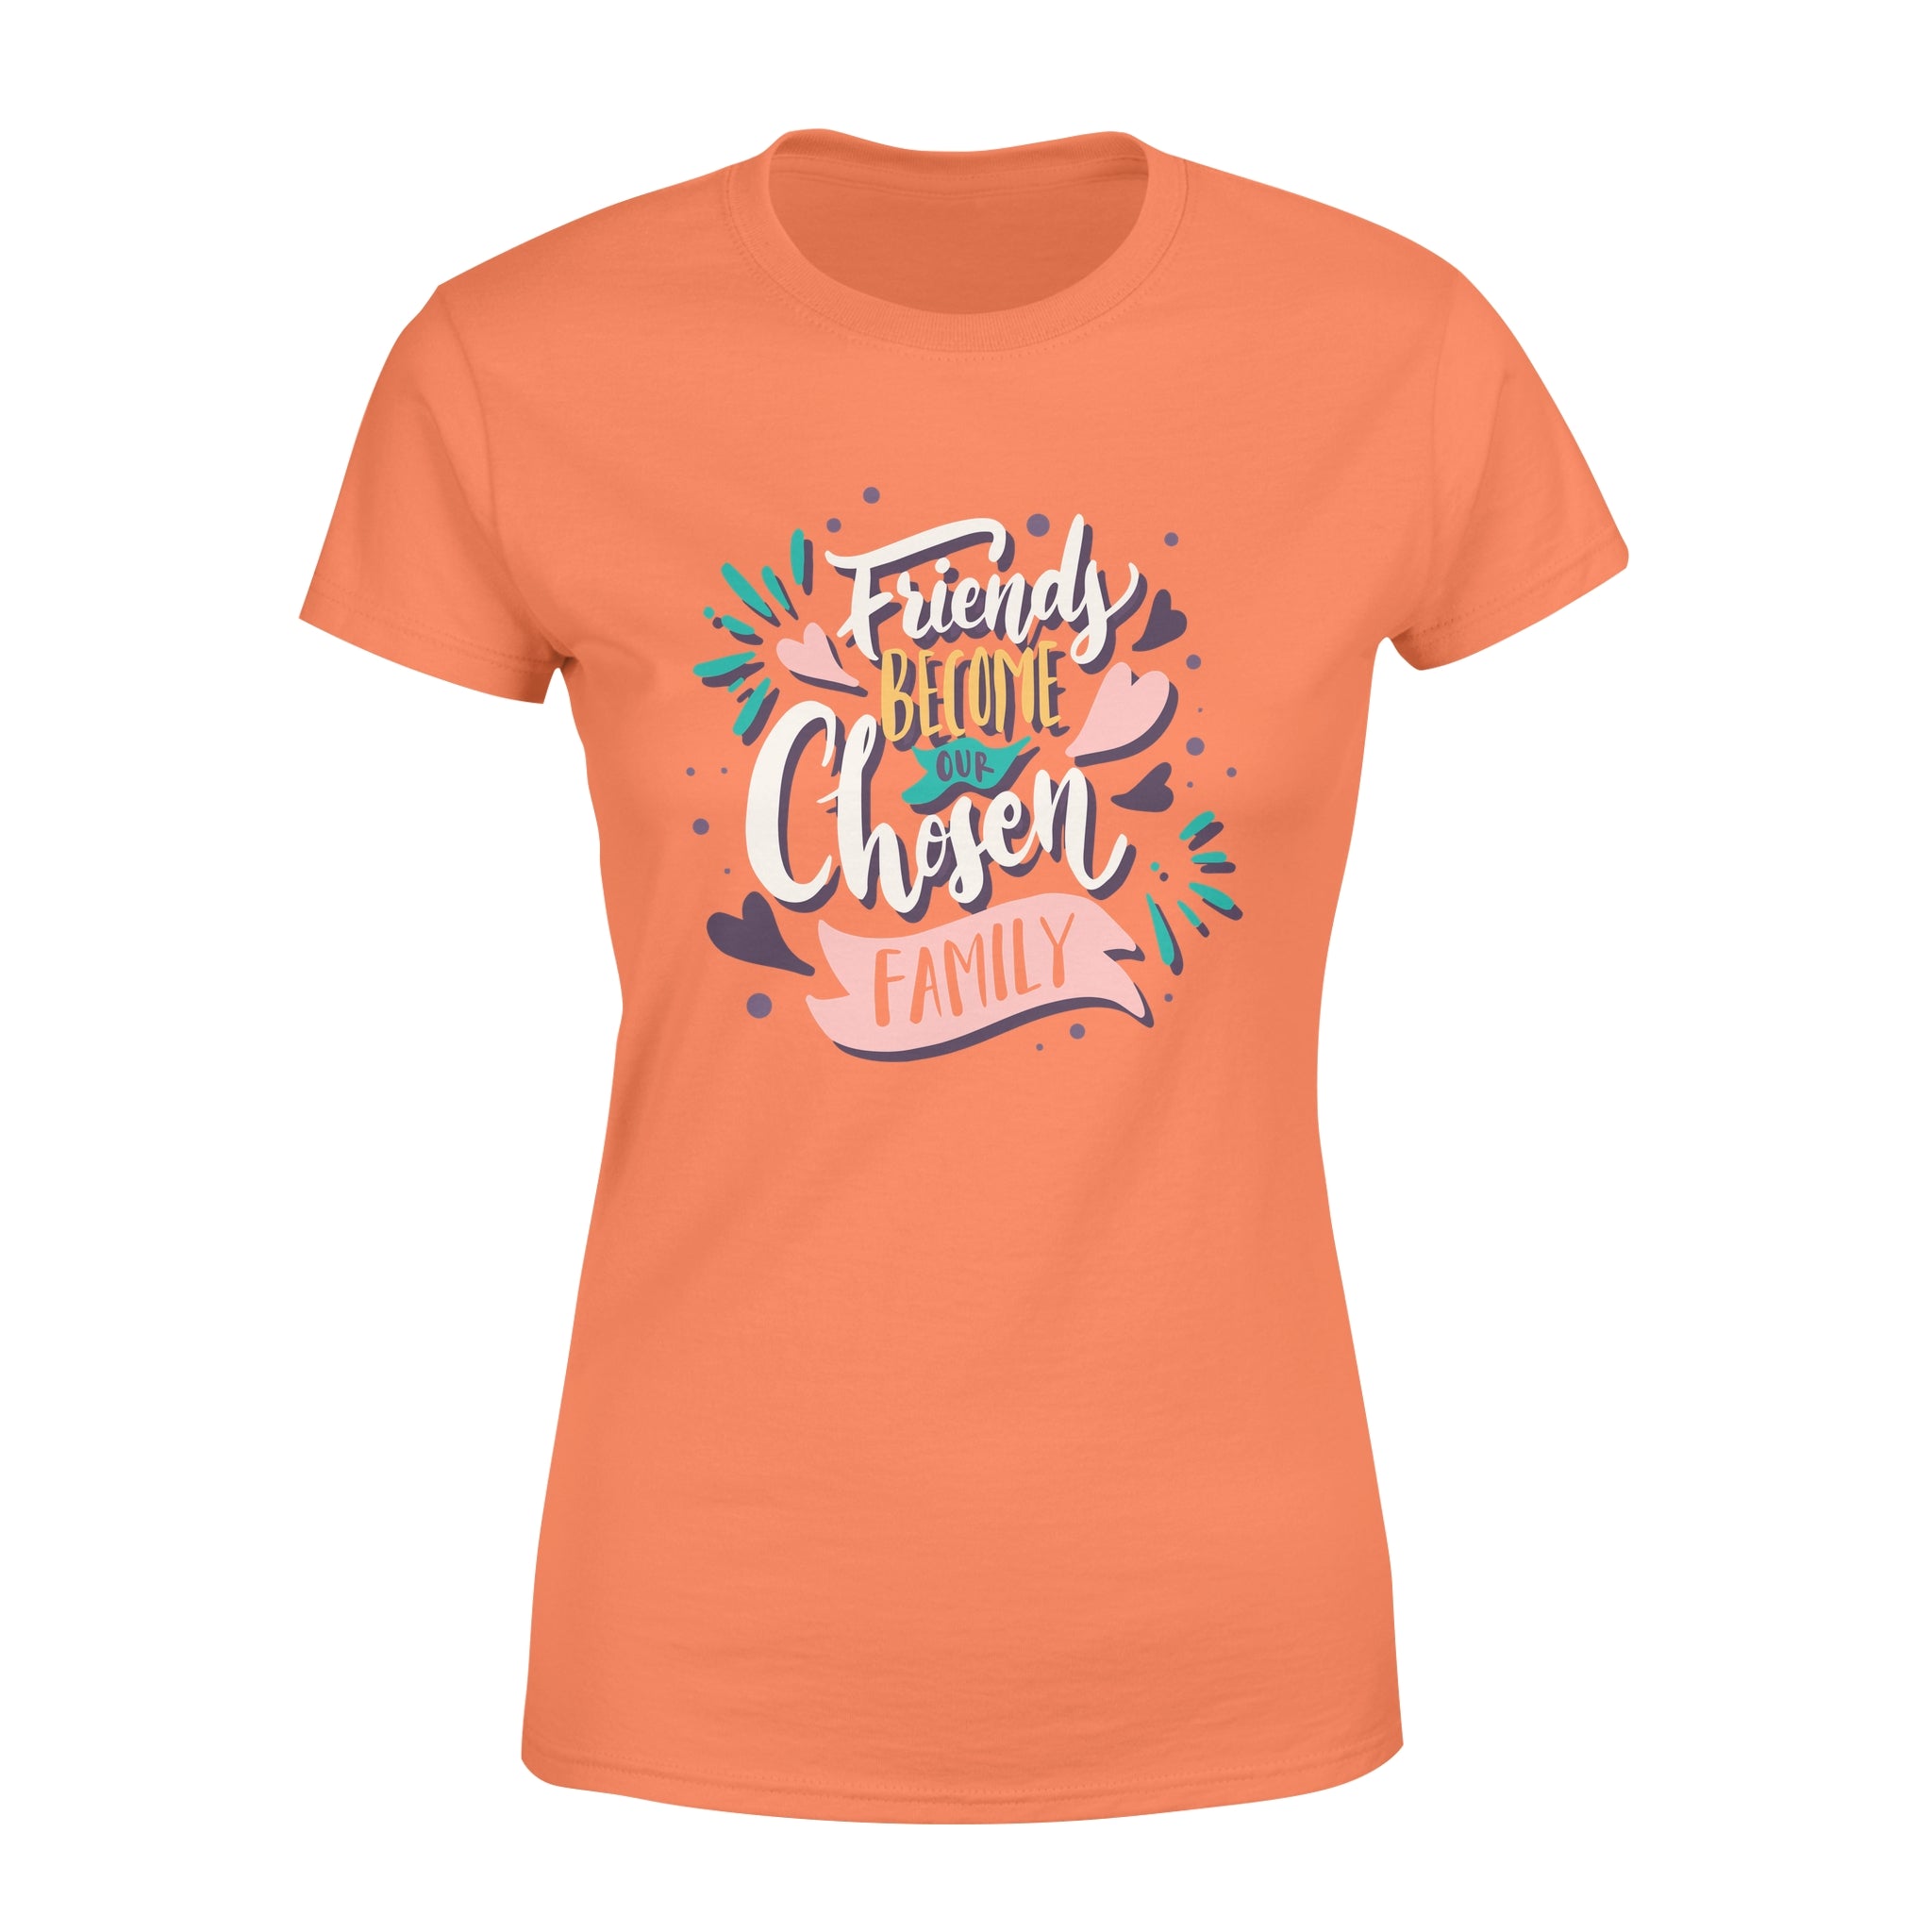 Friend Become Our Chosen Family - Women's T-shirt